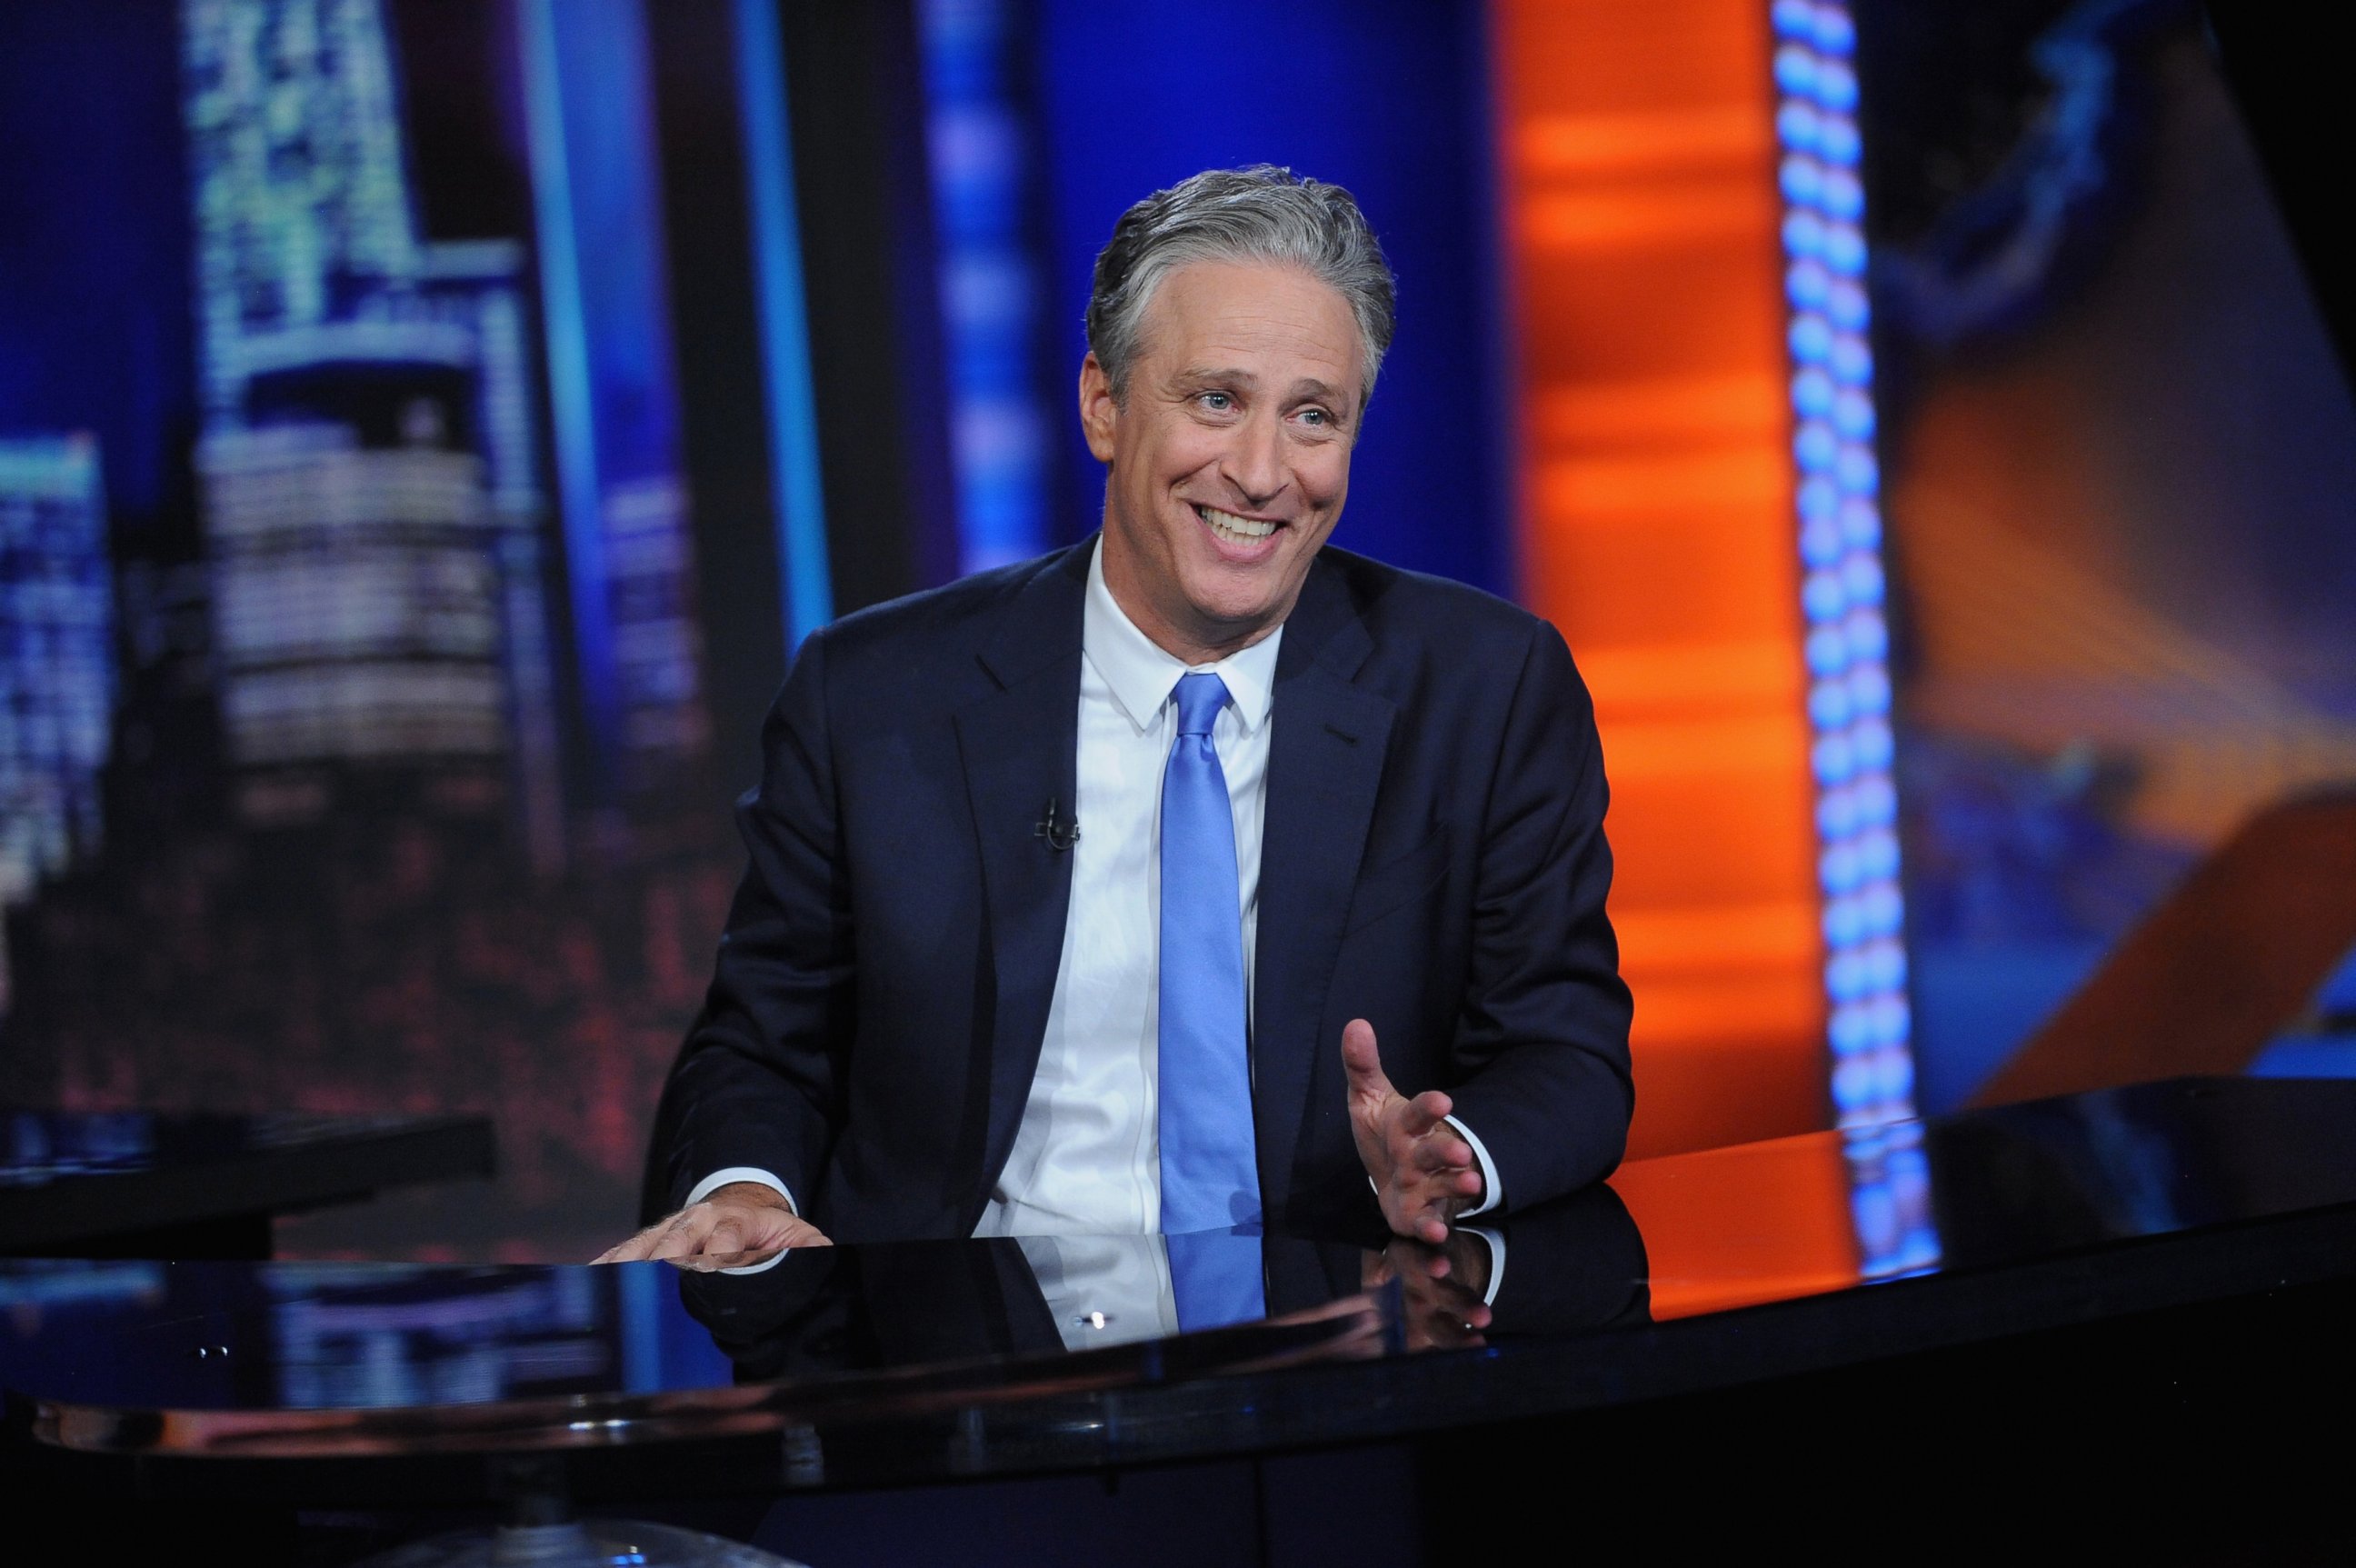 PHOTO: Jon Stewart hosts "The Daily Show with Jon Stewart" on August 6, 2015 in New York City. 